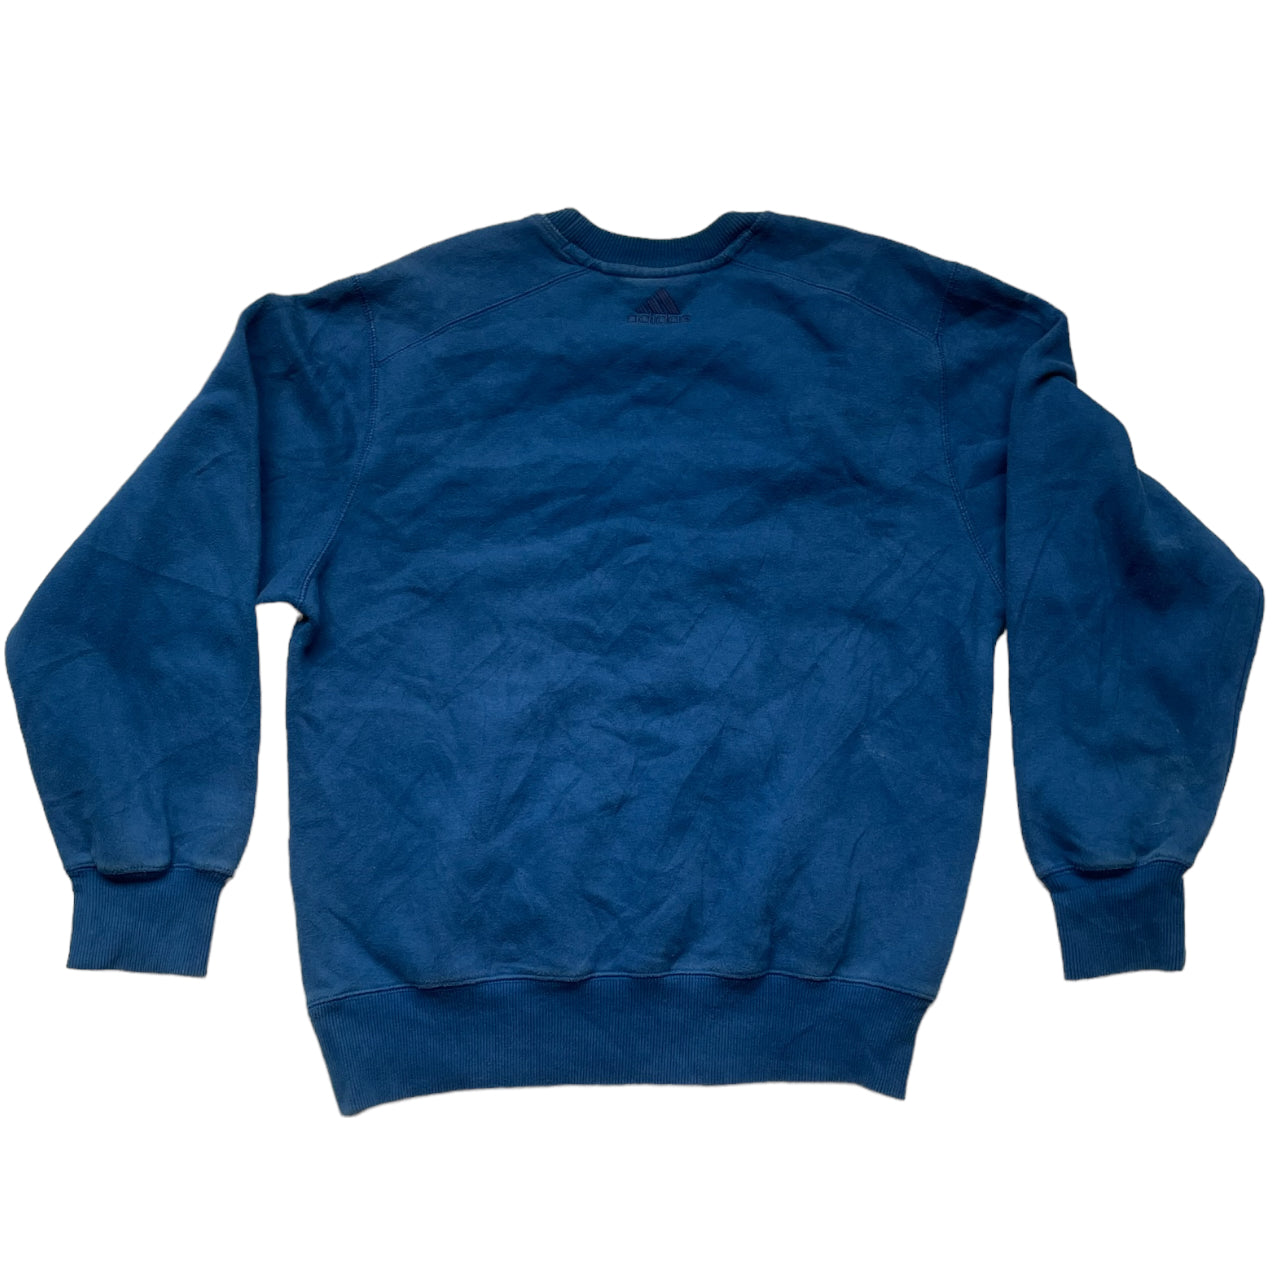 Vintage Adidas Sweatshirt 90s Retro S Size A_39